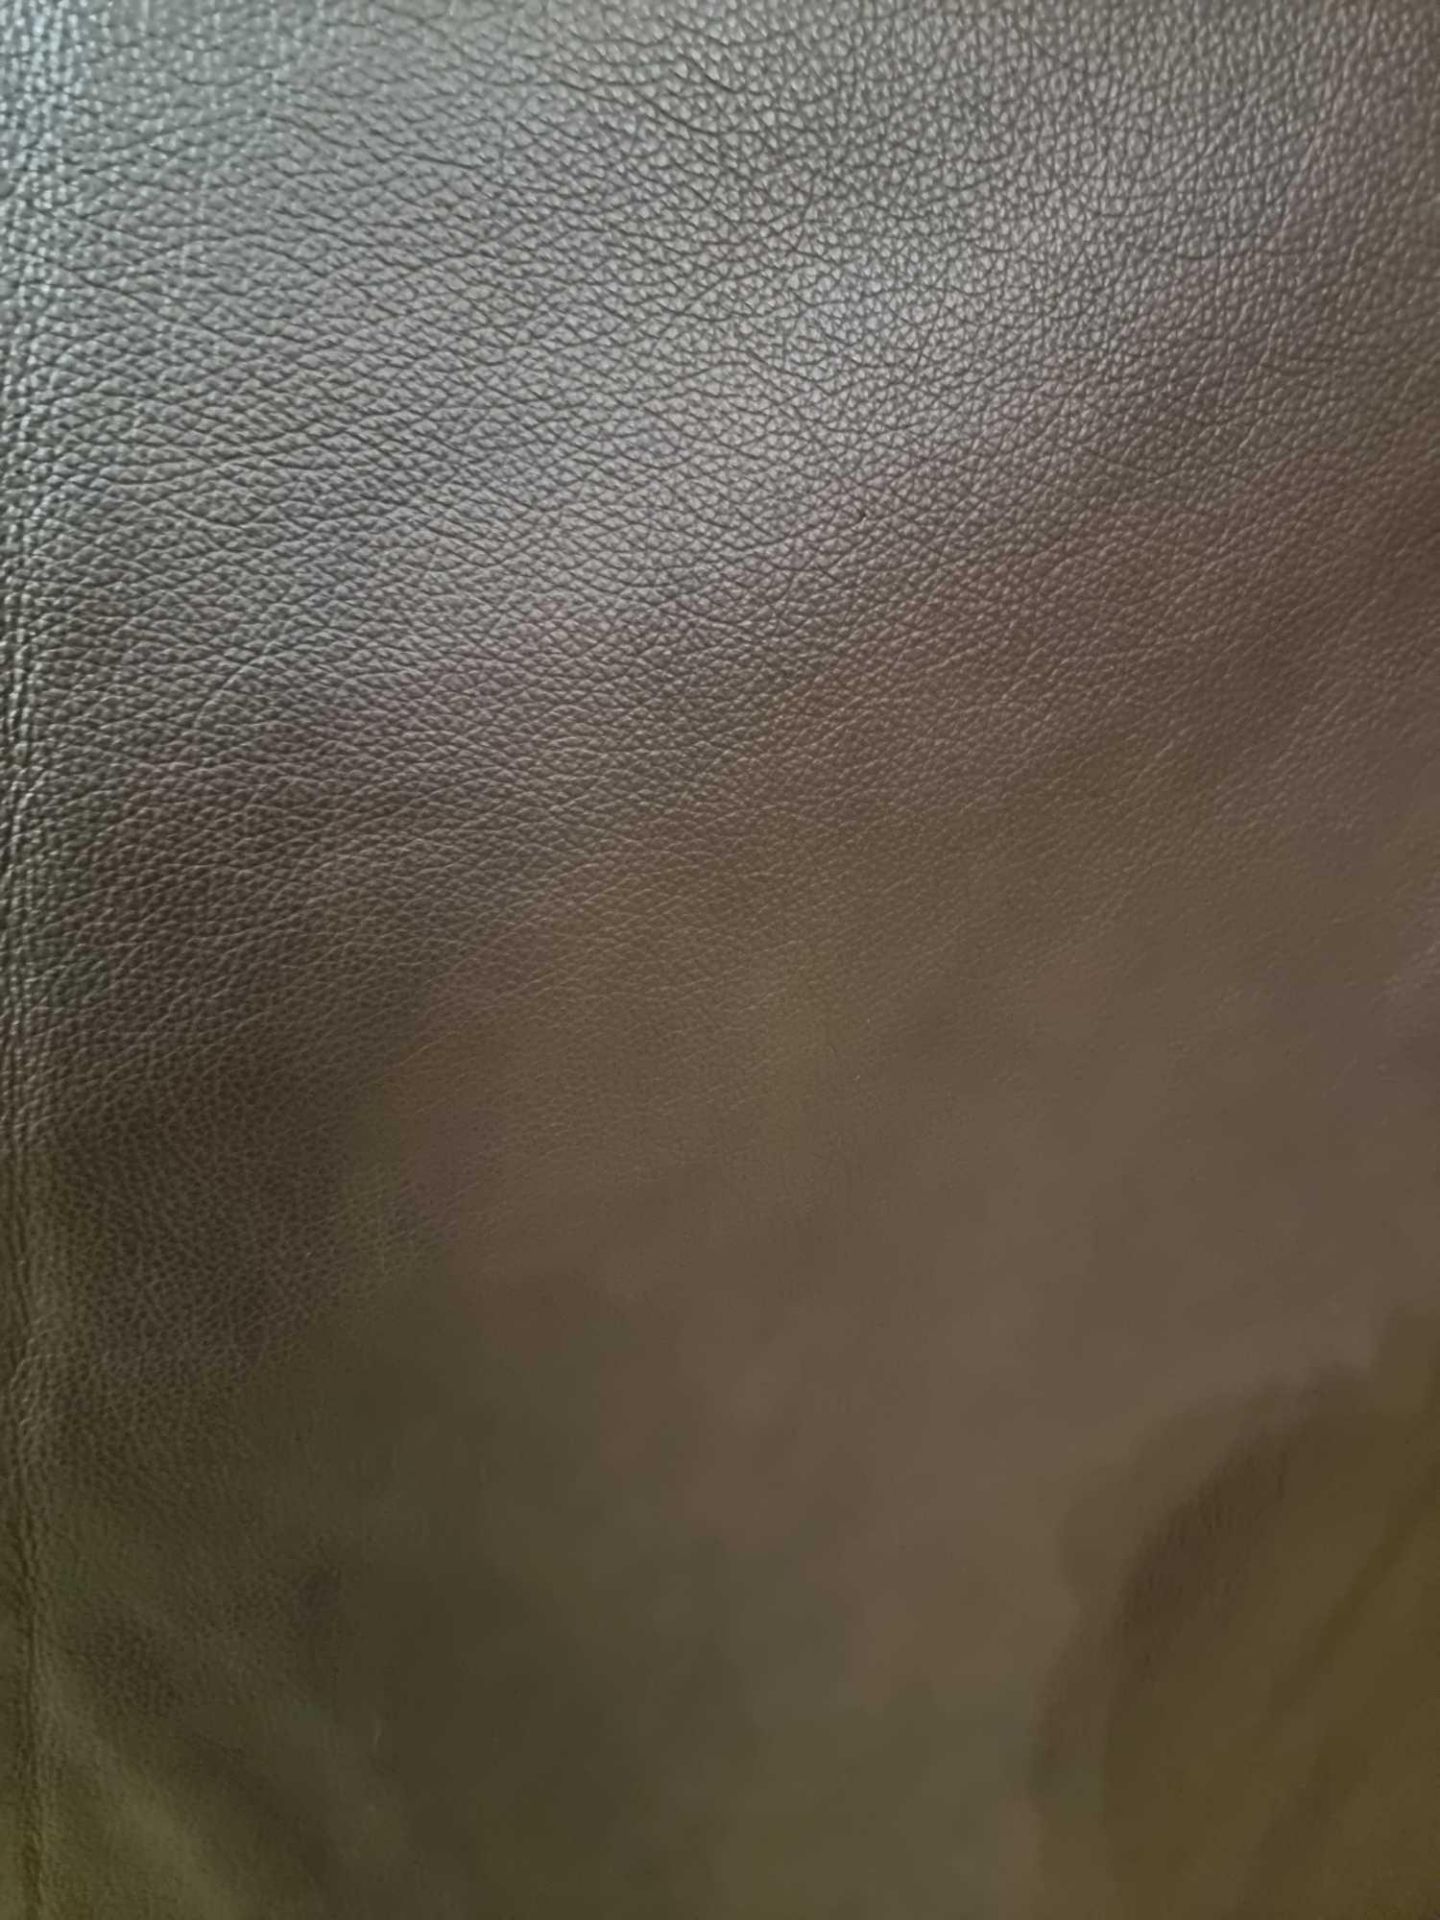 Dark Chocolate Calbe Leather Hide approximately 3.42mÂ² 1.9 x 1.8cm - Bild 2 aus 3